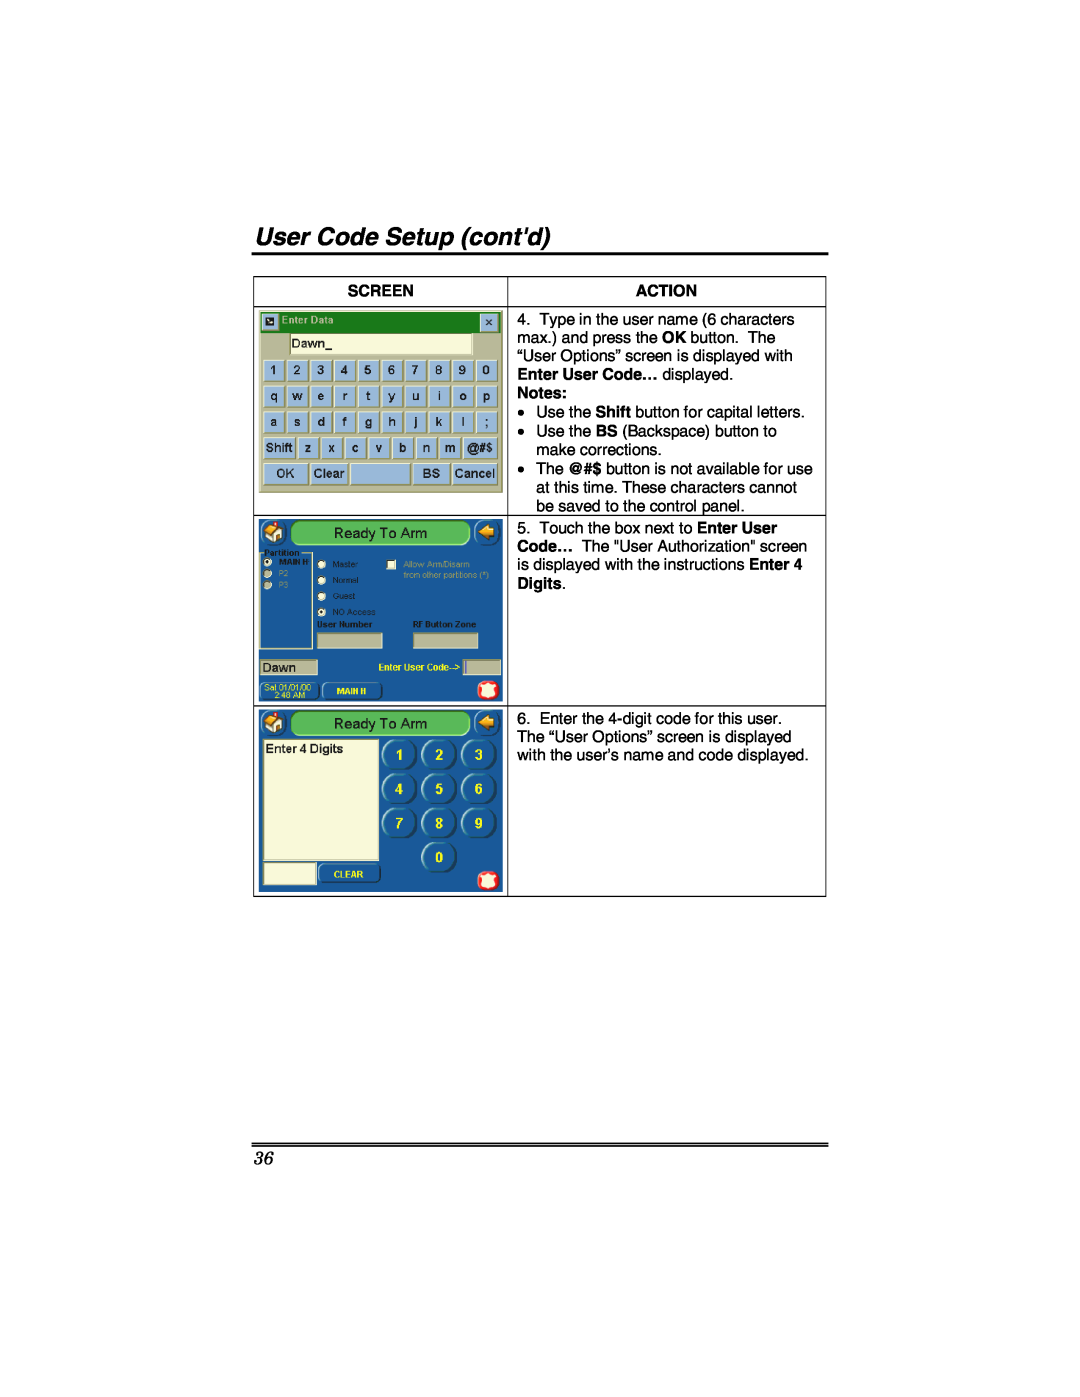 Honeywell 6271 manual User Code Setup contd, Screen, Action, Enter User Code… displayed, Digits 